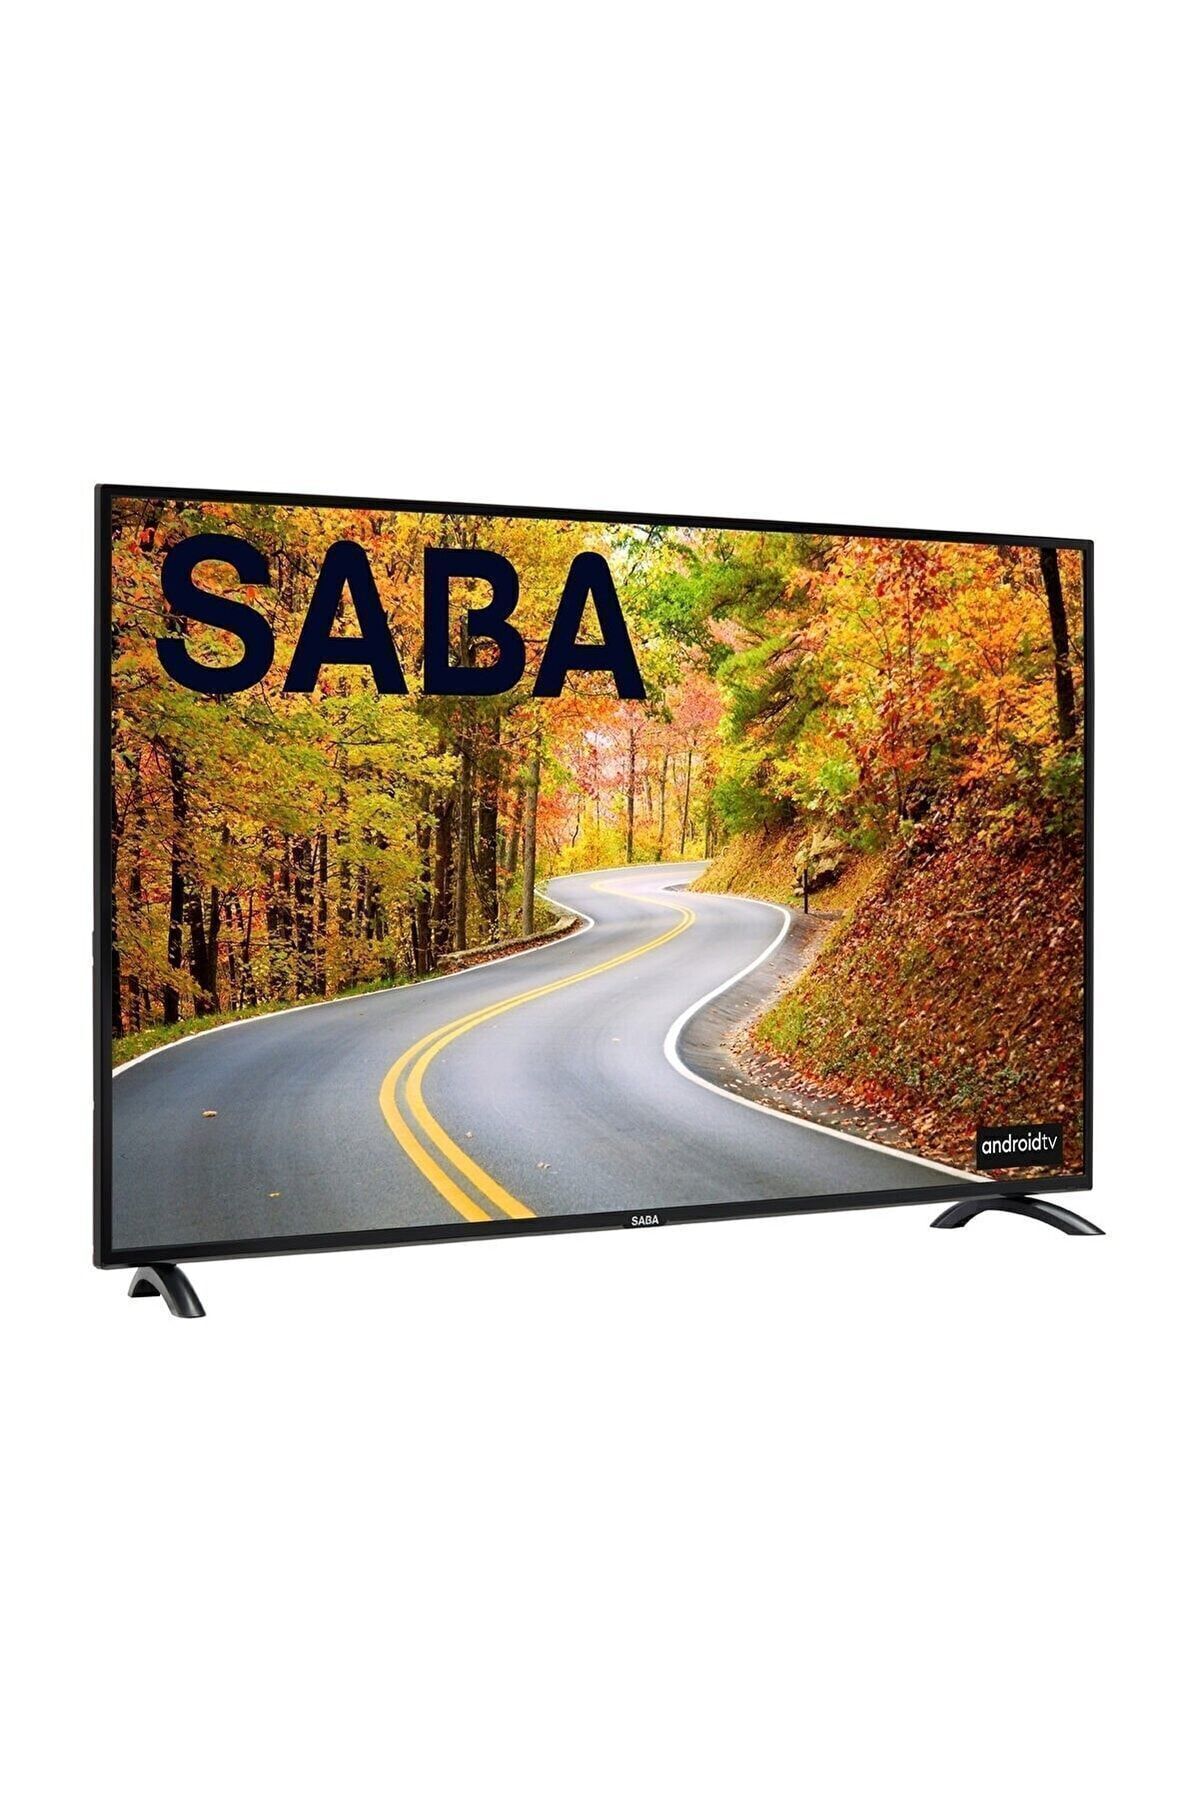 Saba Sb50351 50" 127 Ekran Uydu Alıcılı 4k Ultra Hd Android Smart Led Tv